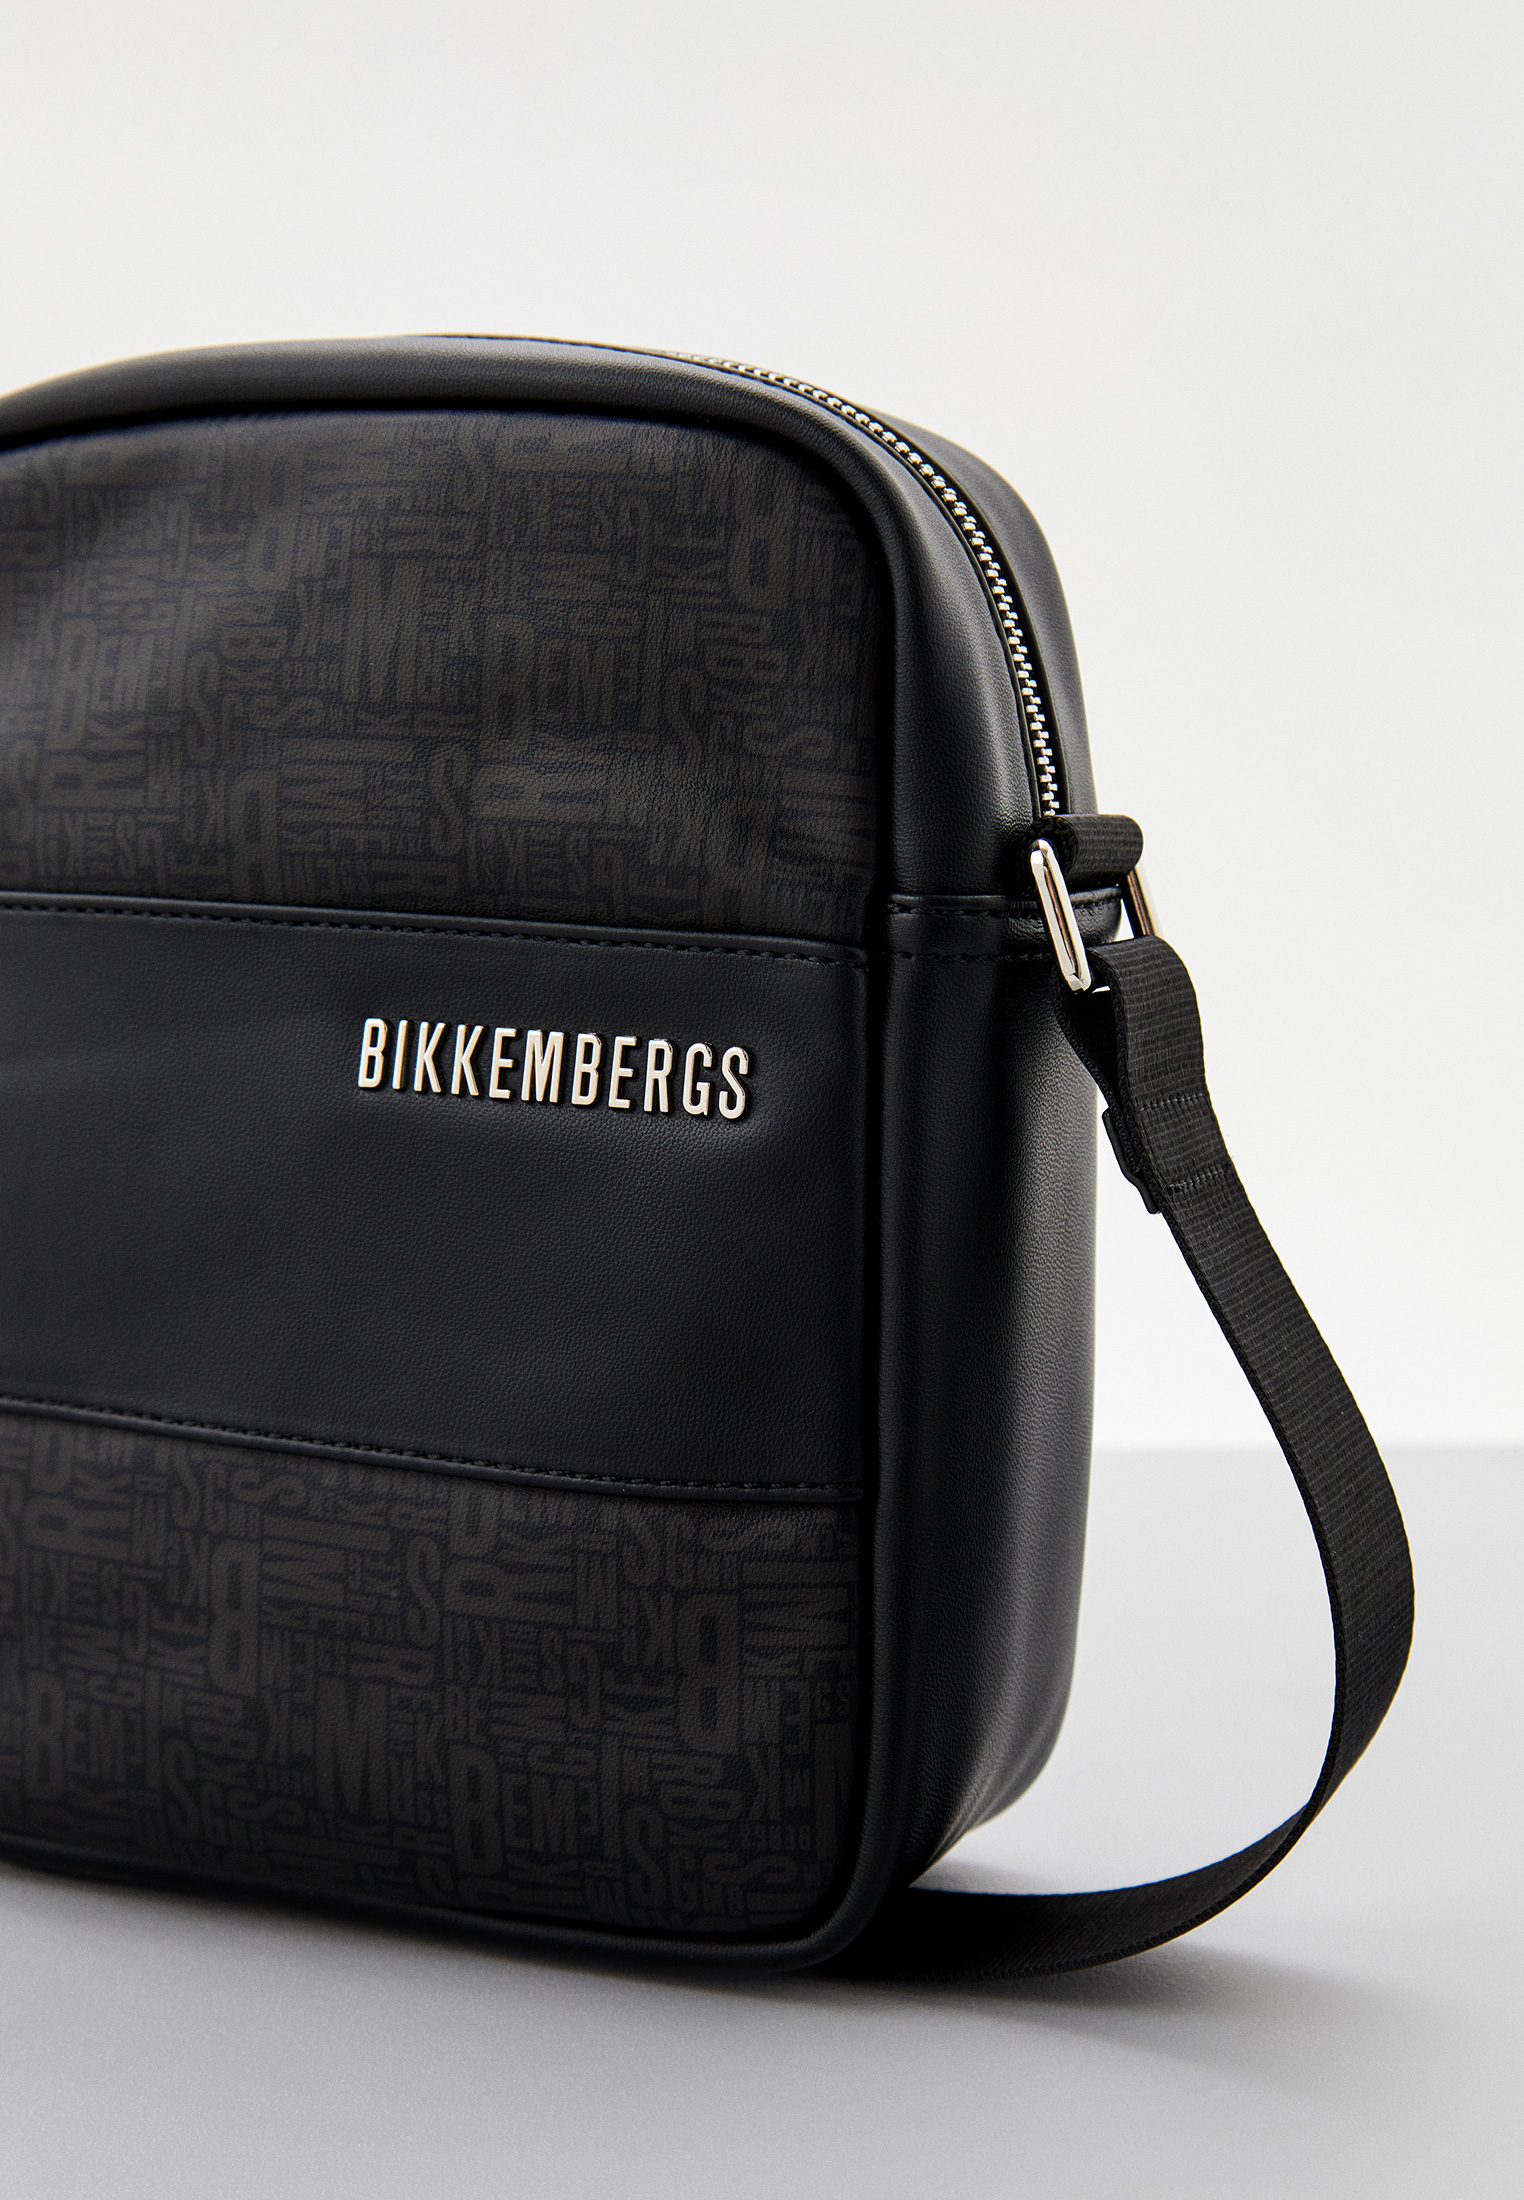 Bikkembergs сумка мужская через плечо. Сумка Bikkembergs. Купить мужскую сумку Bikkembergs.